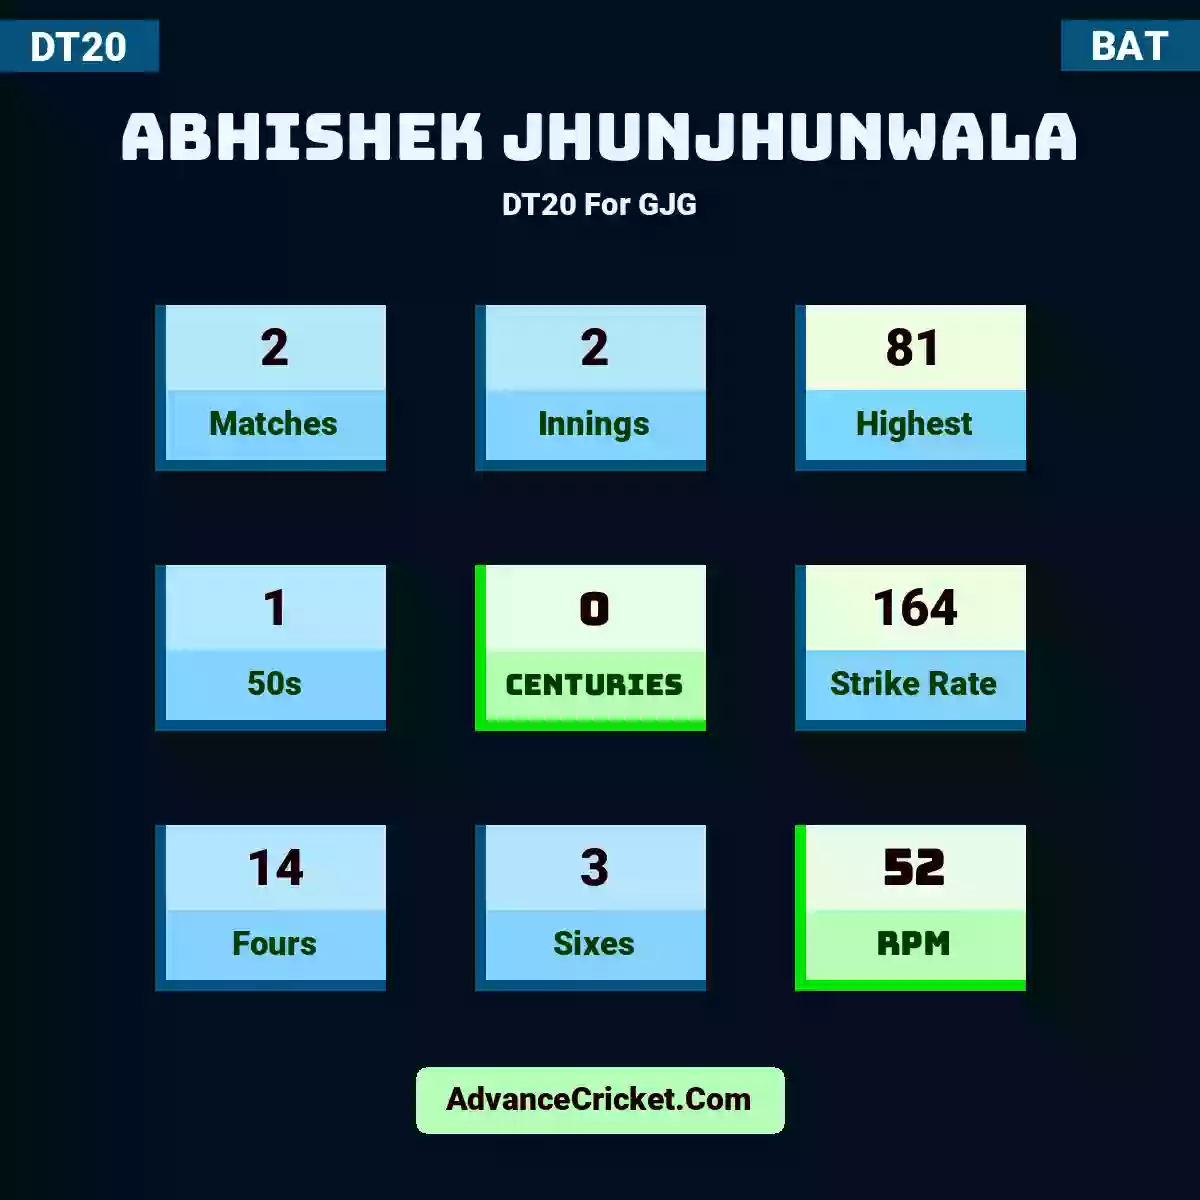 Abhishek Jhunjhunwala DT20  For GJG, Abhishek Jhunjhunwala played 2 matches, scored 81 runs as highest, 1 half-centuries, and 0 centuries, with a strike rate of 164. A.Jhunjhunwala hit 14 fours and 3 sixes, with an RPM of 52.